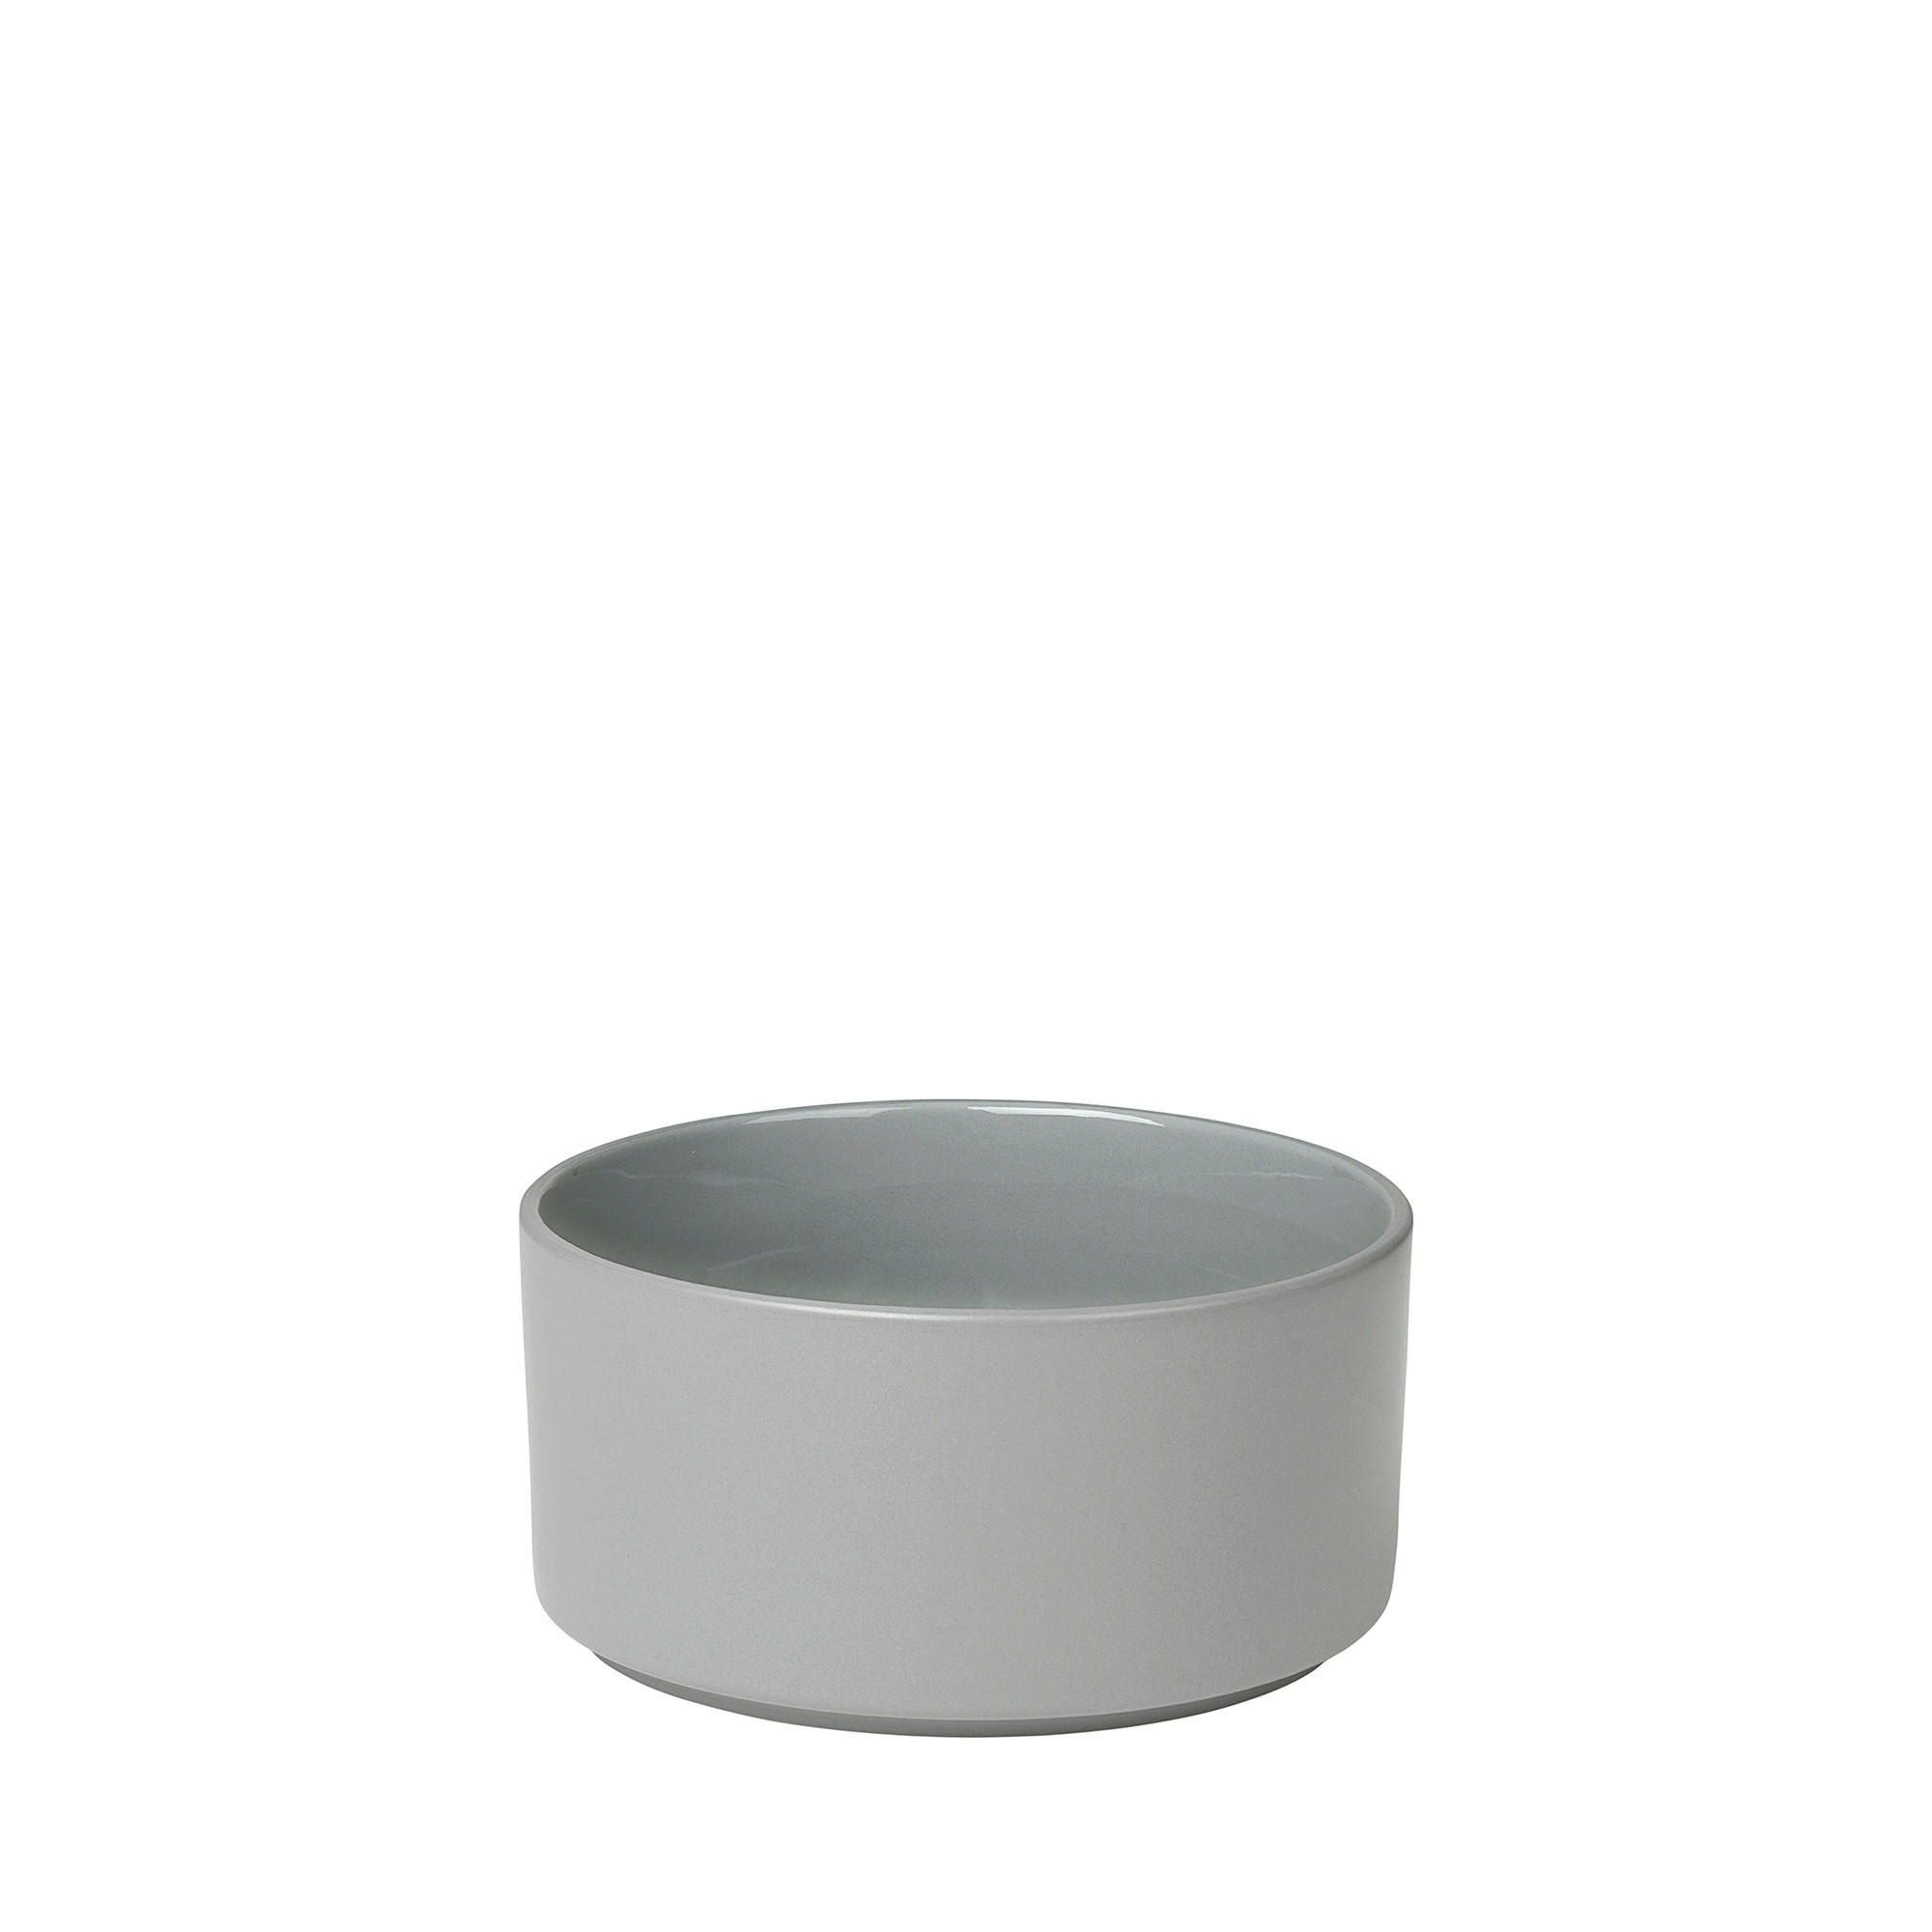 SCHALE Keramik Steingut  - Hellgrau, Design, Keramik (14/7cm) - Blomus